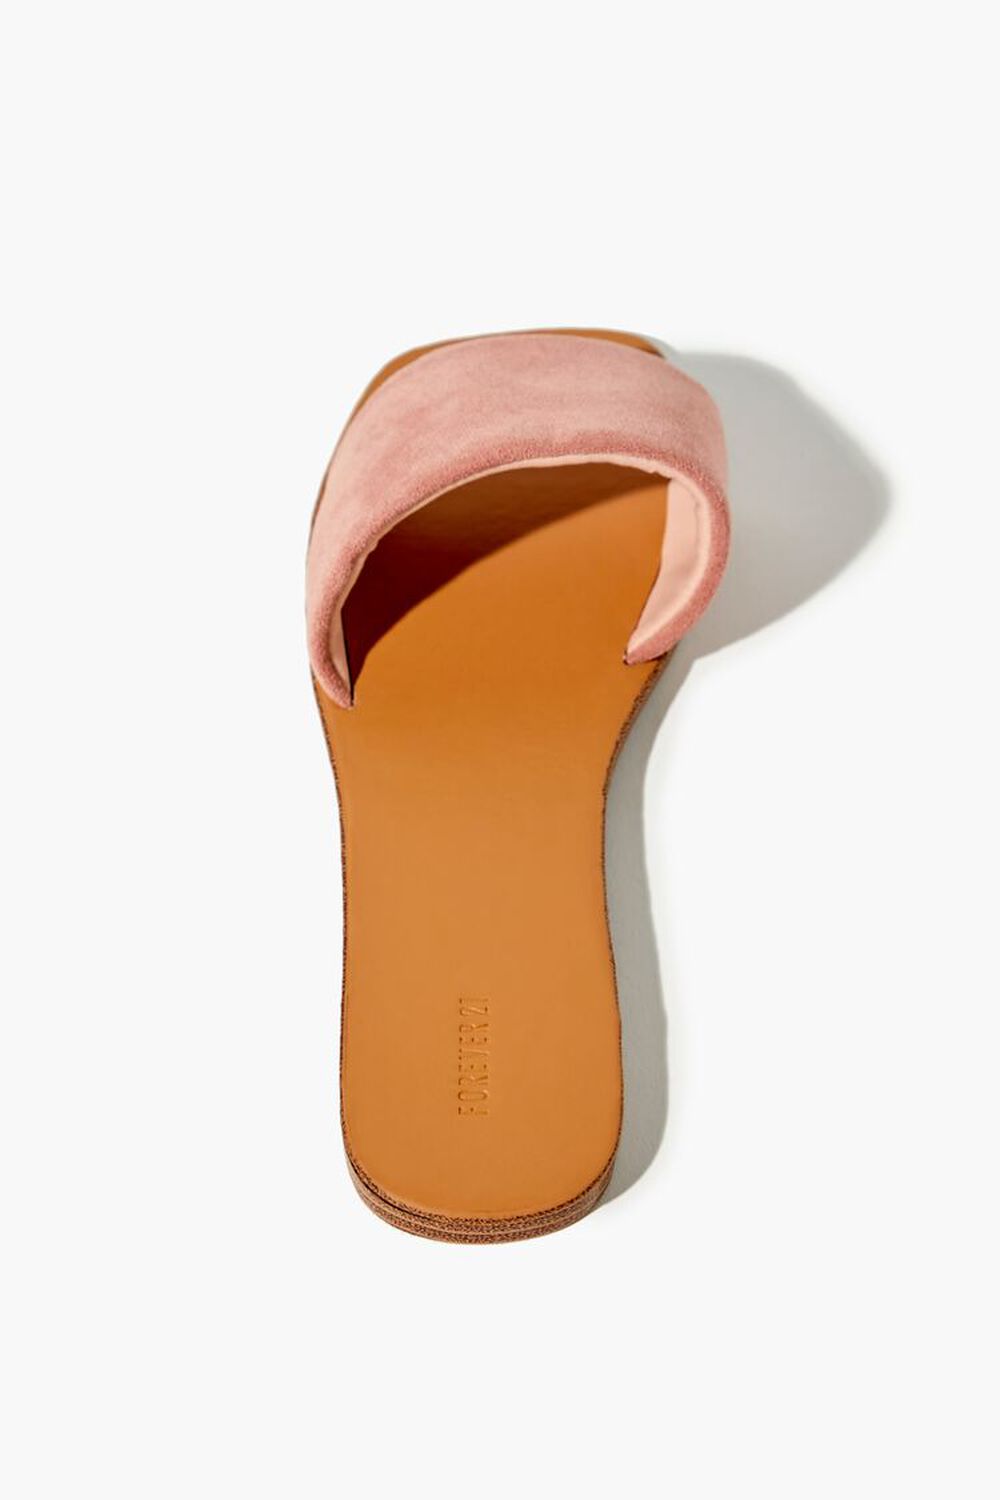 BLUSH Faux Suede Slip-On Sandals, image 3